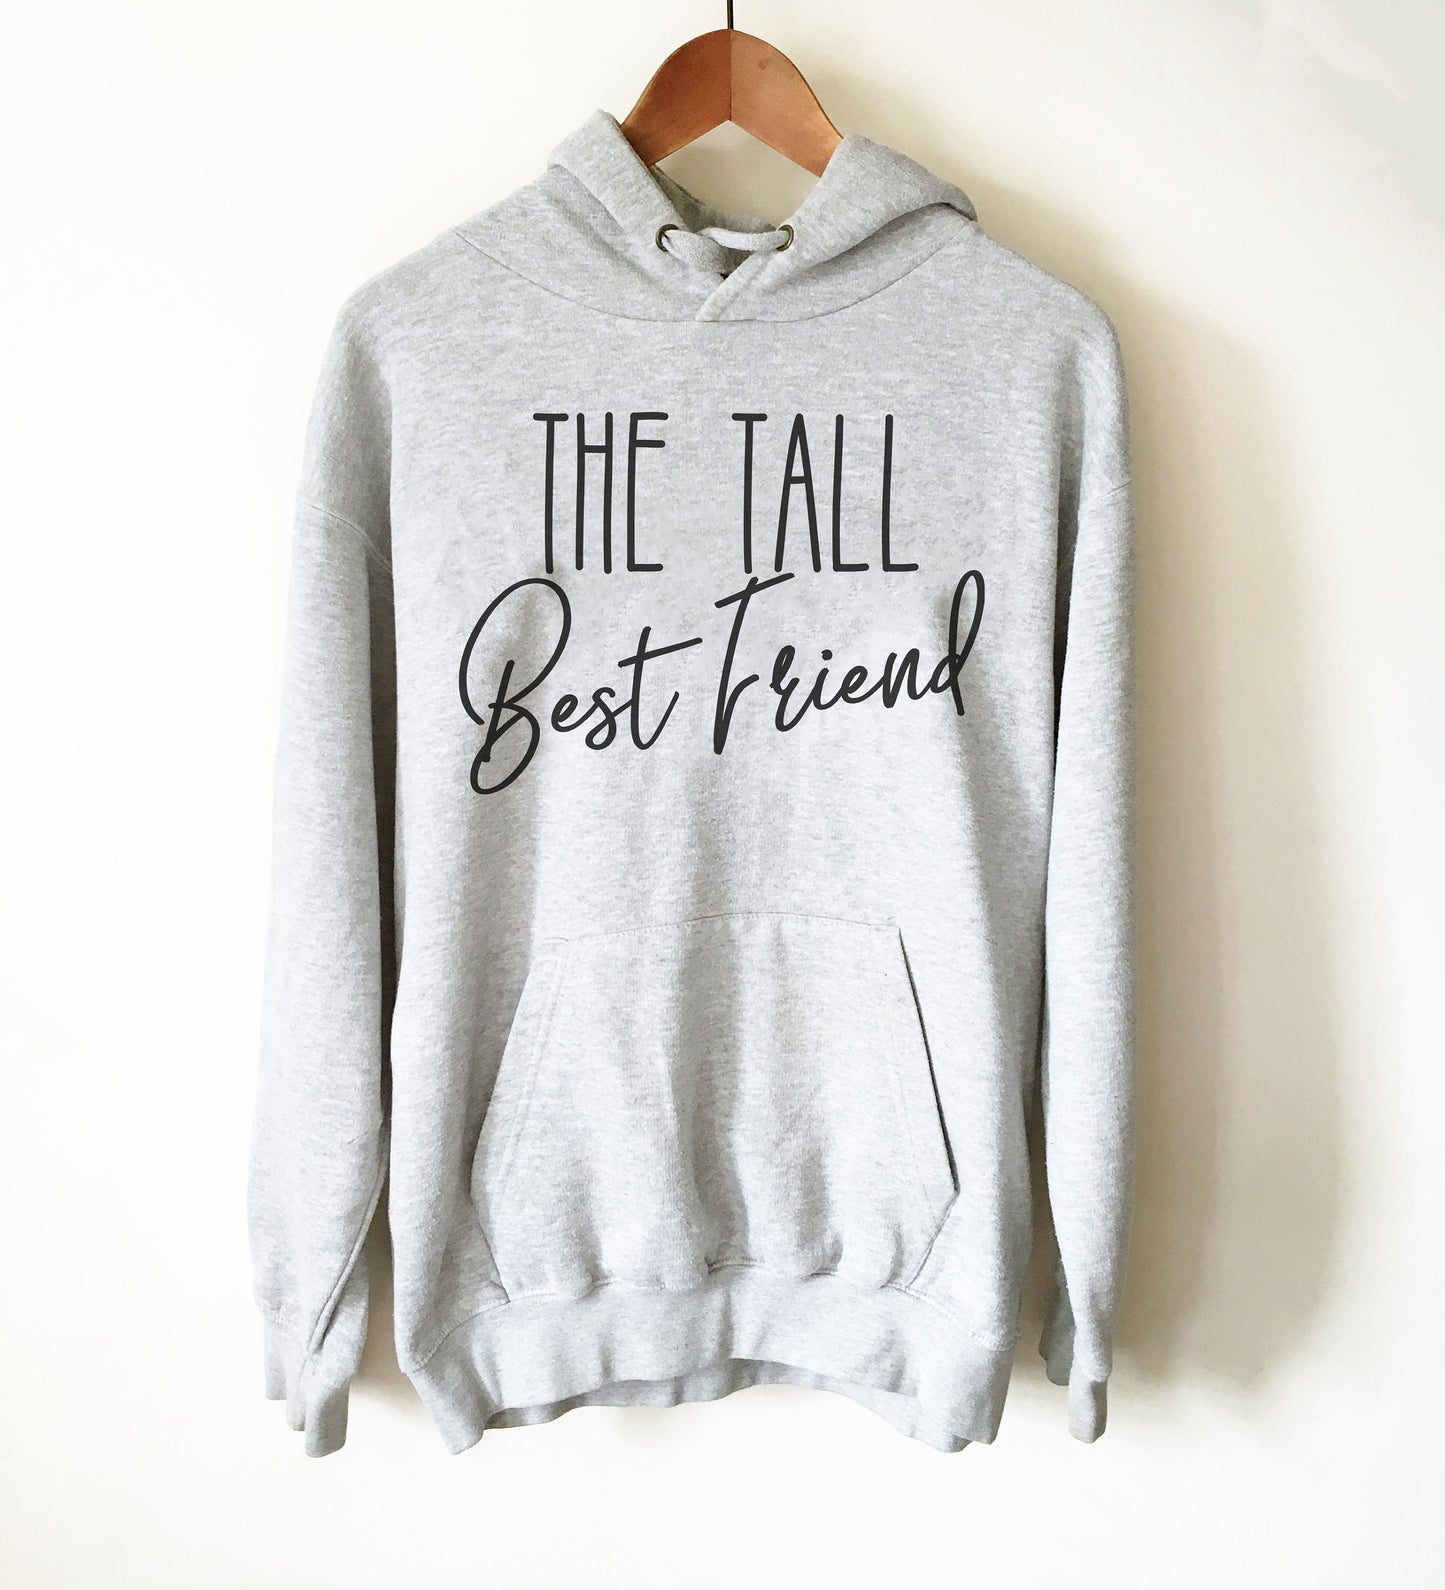 The Tall Best Friend Hoodie - Best Friend Shirt, Best Friend Gift, Bestie, Besties Shirt, Bestie Gift, BFF Gifts, Birthday Shirt